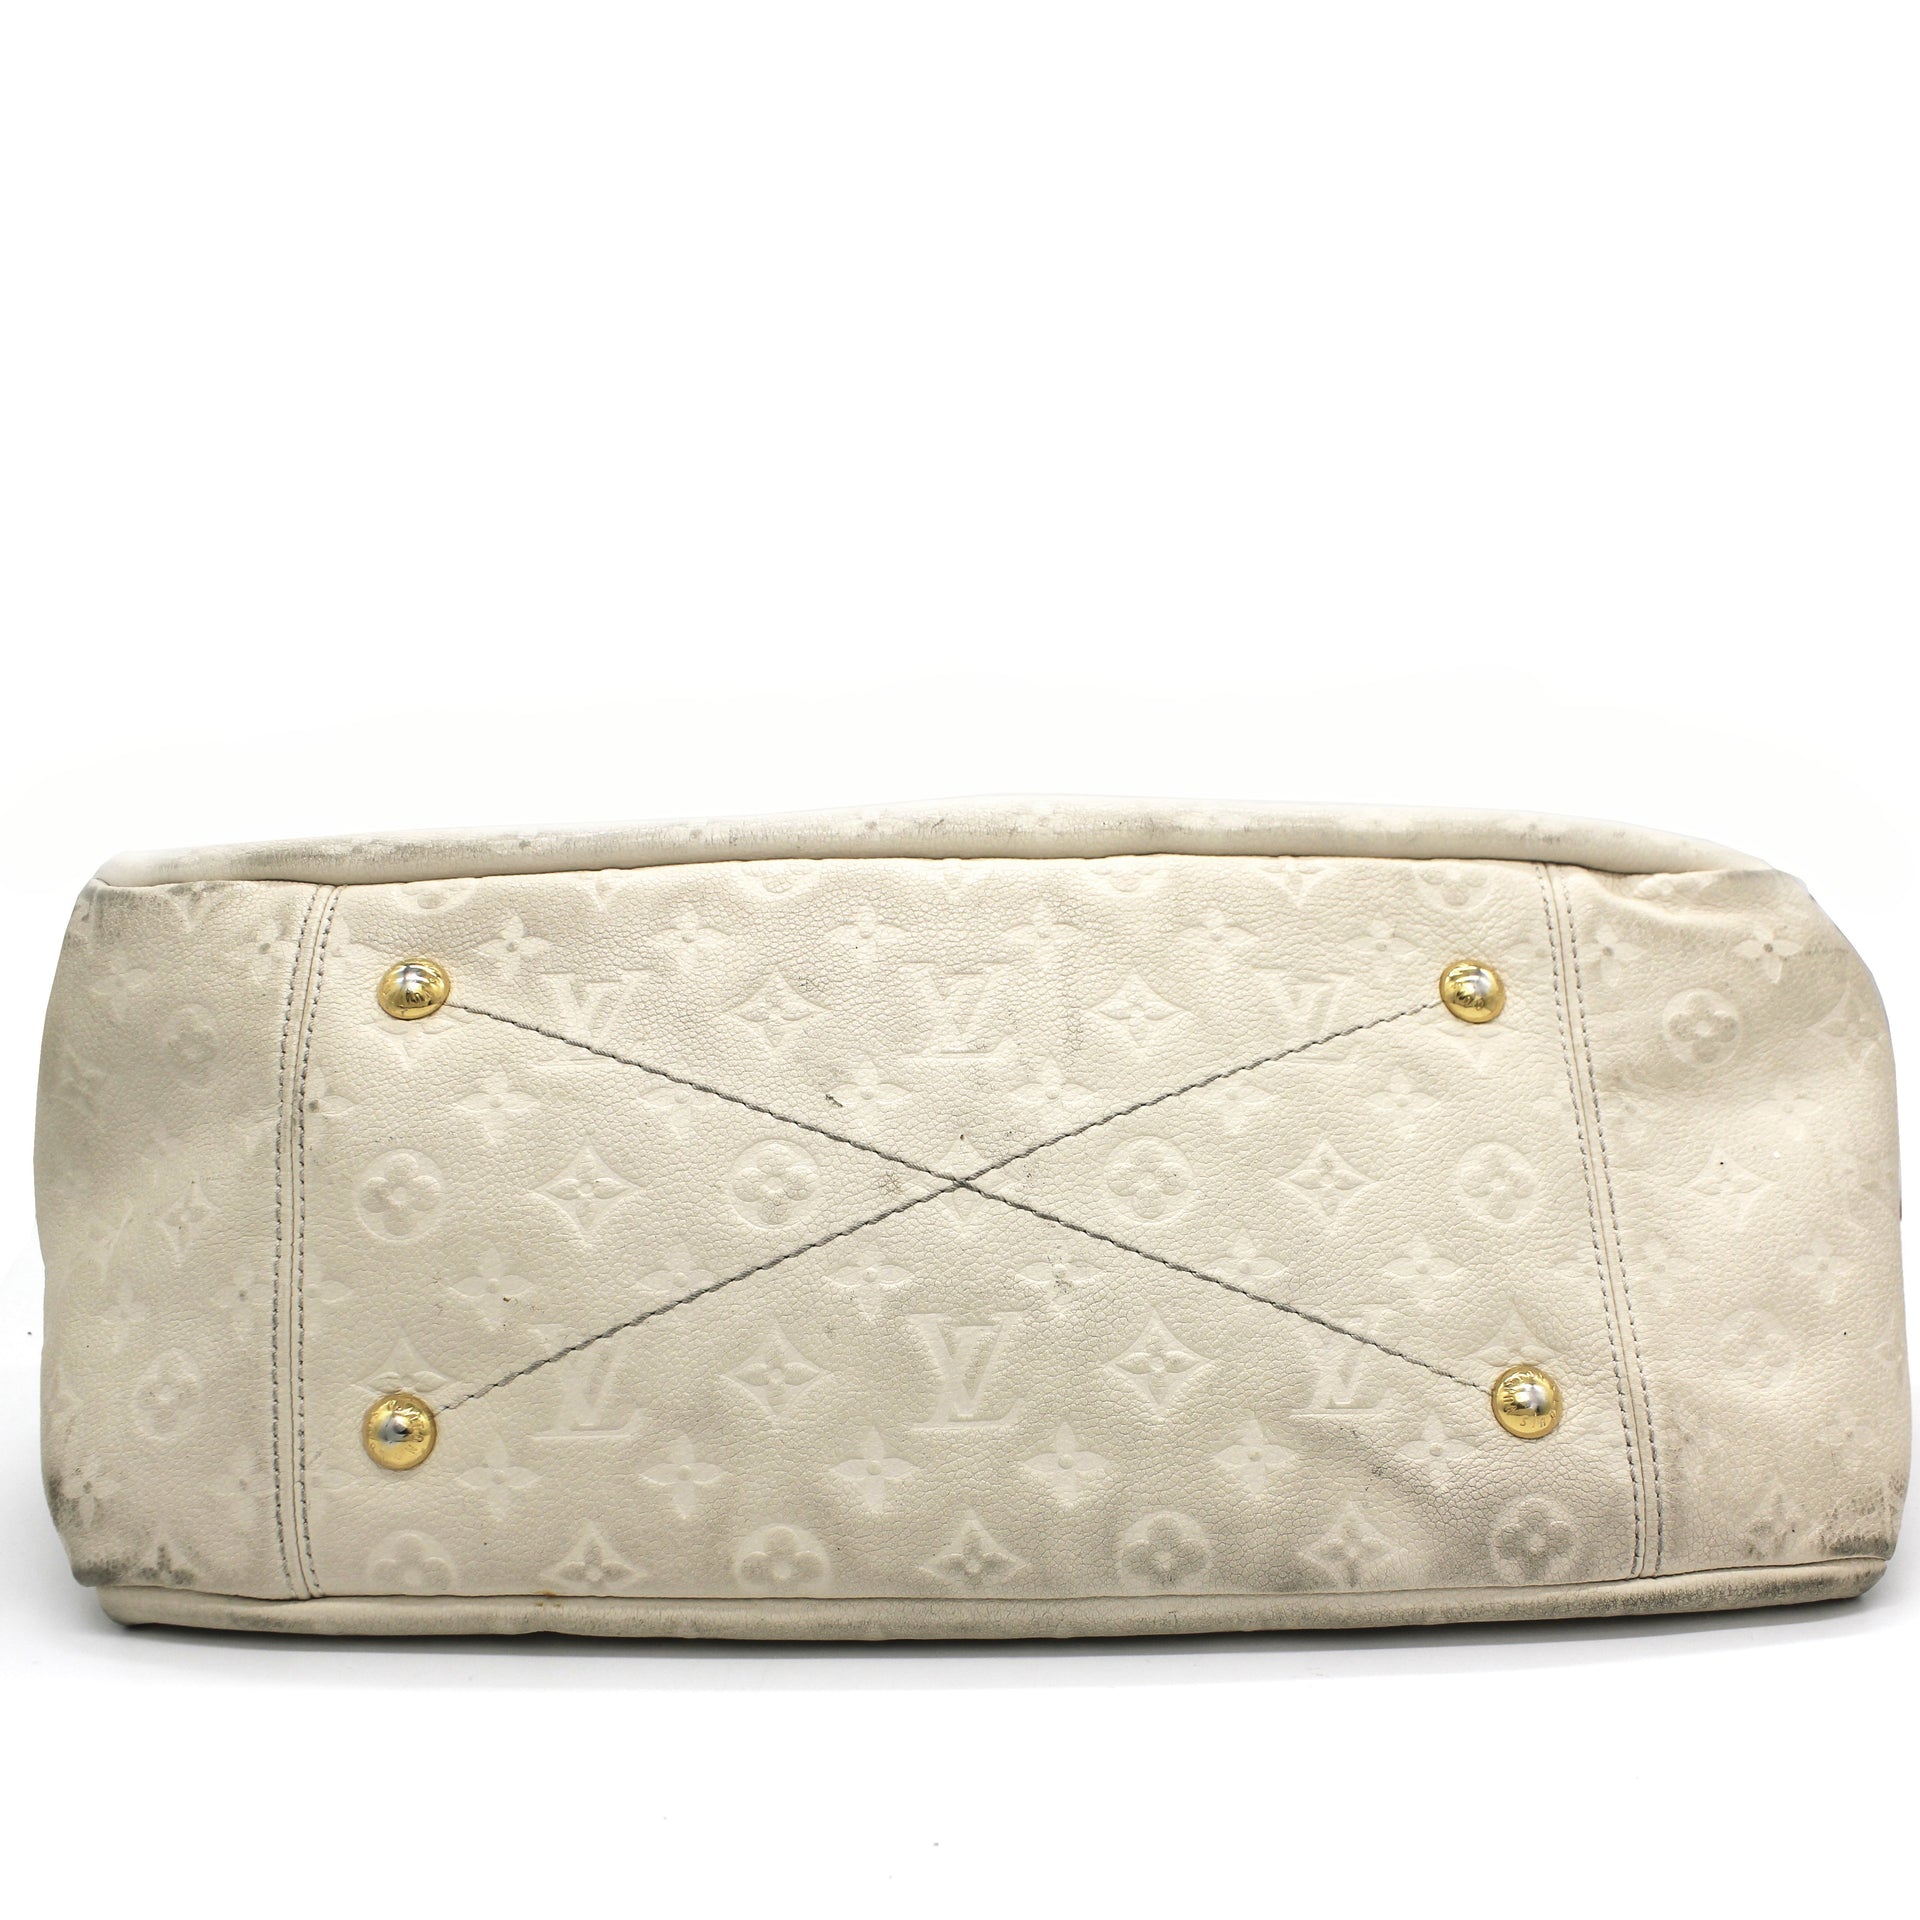 Louis Vuitton, Bags, Louis Vuitton Arsty Mm Monogram Handbag